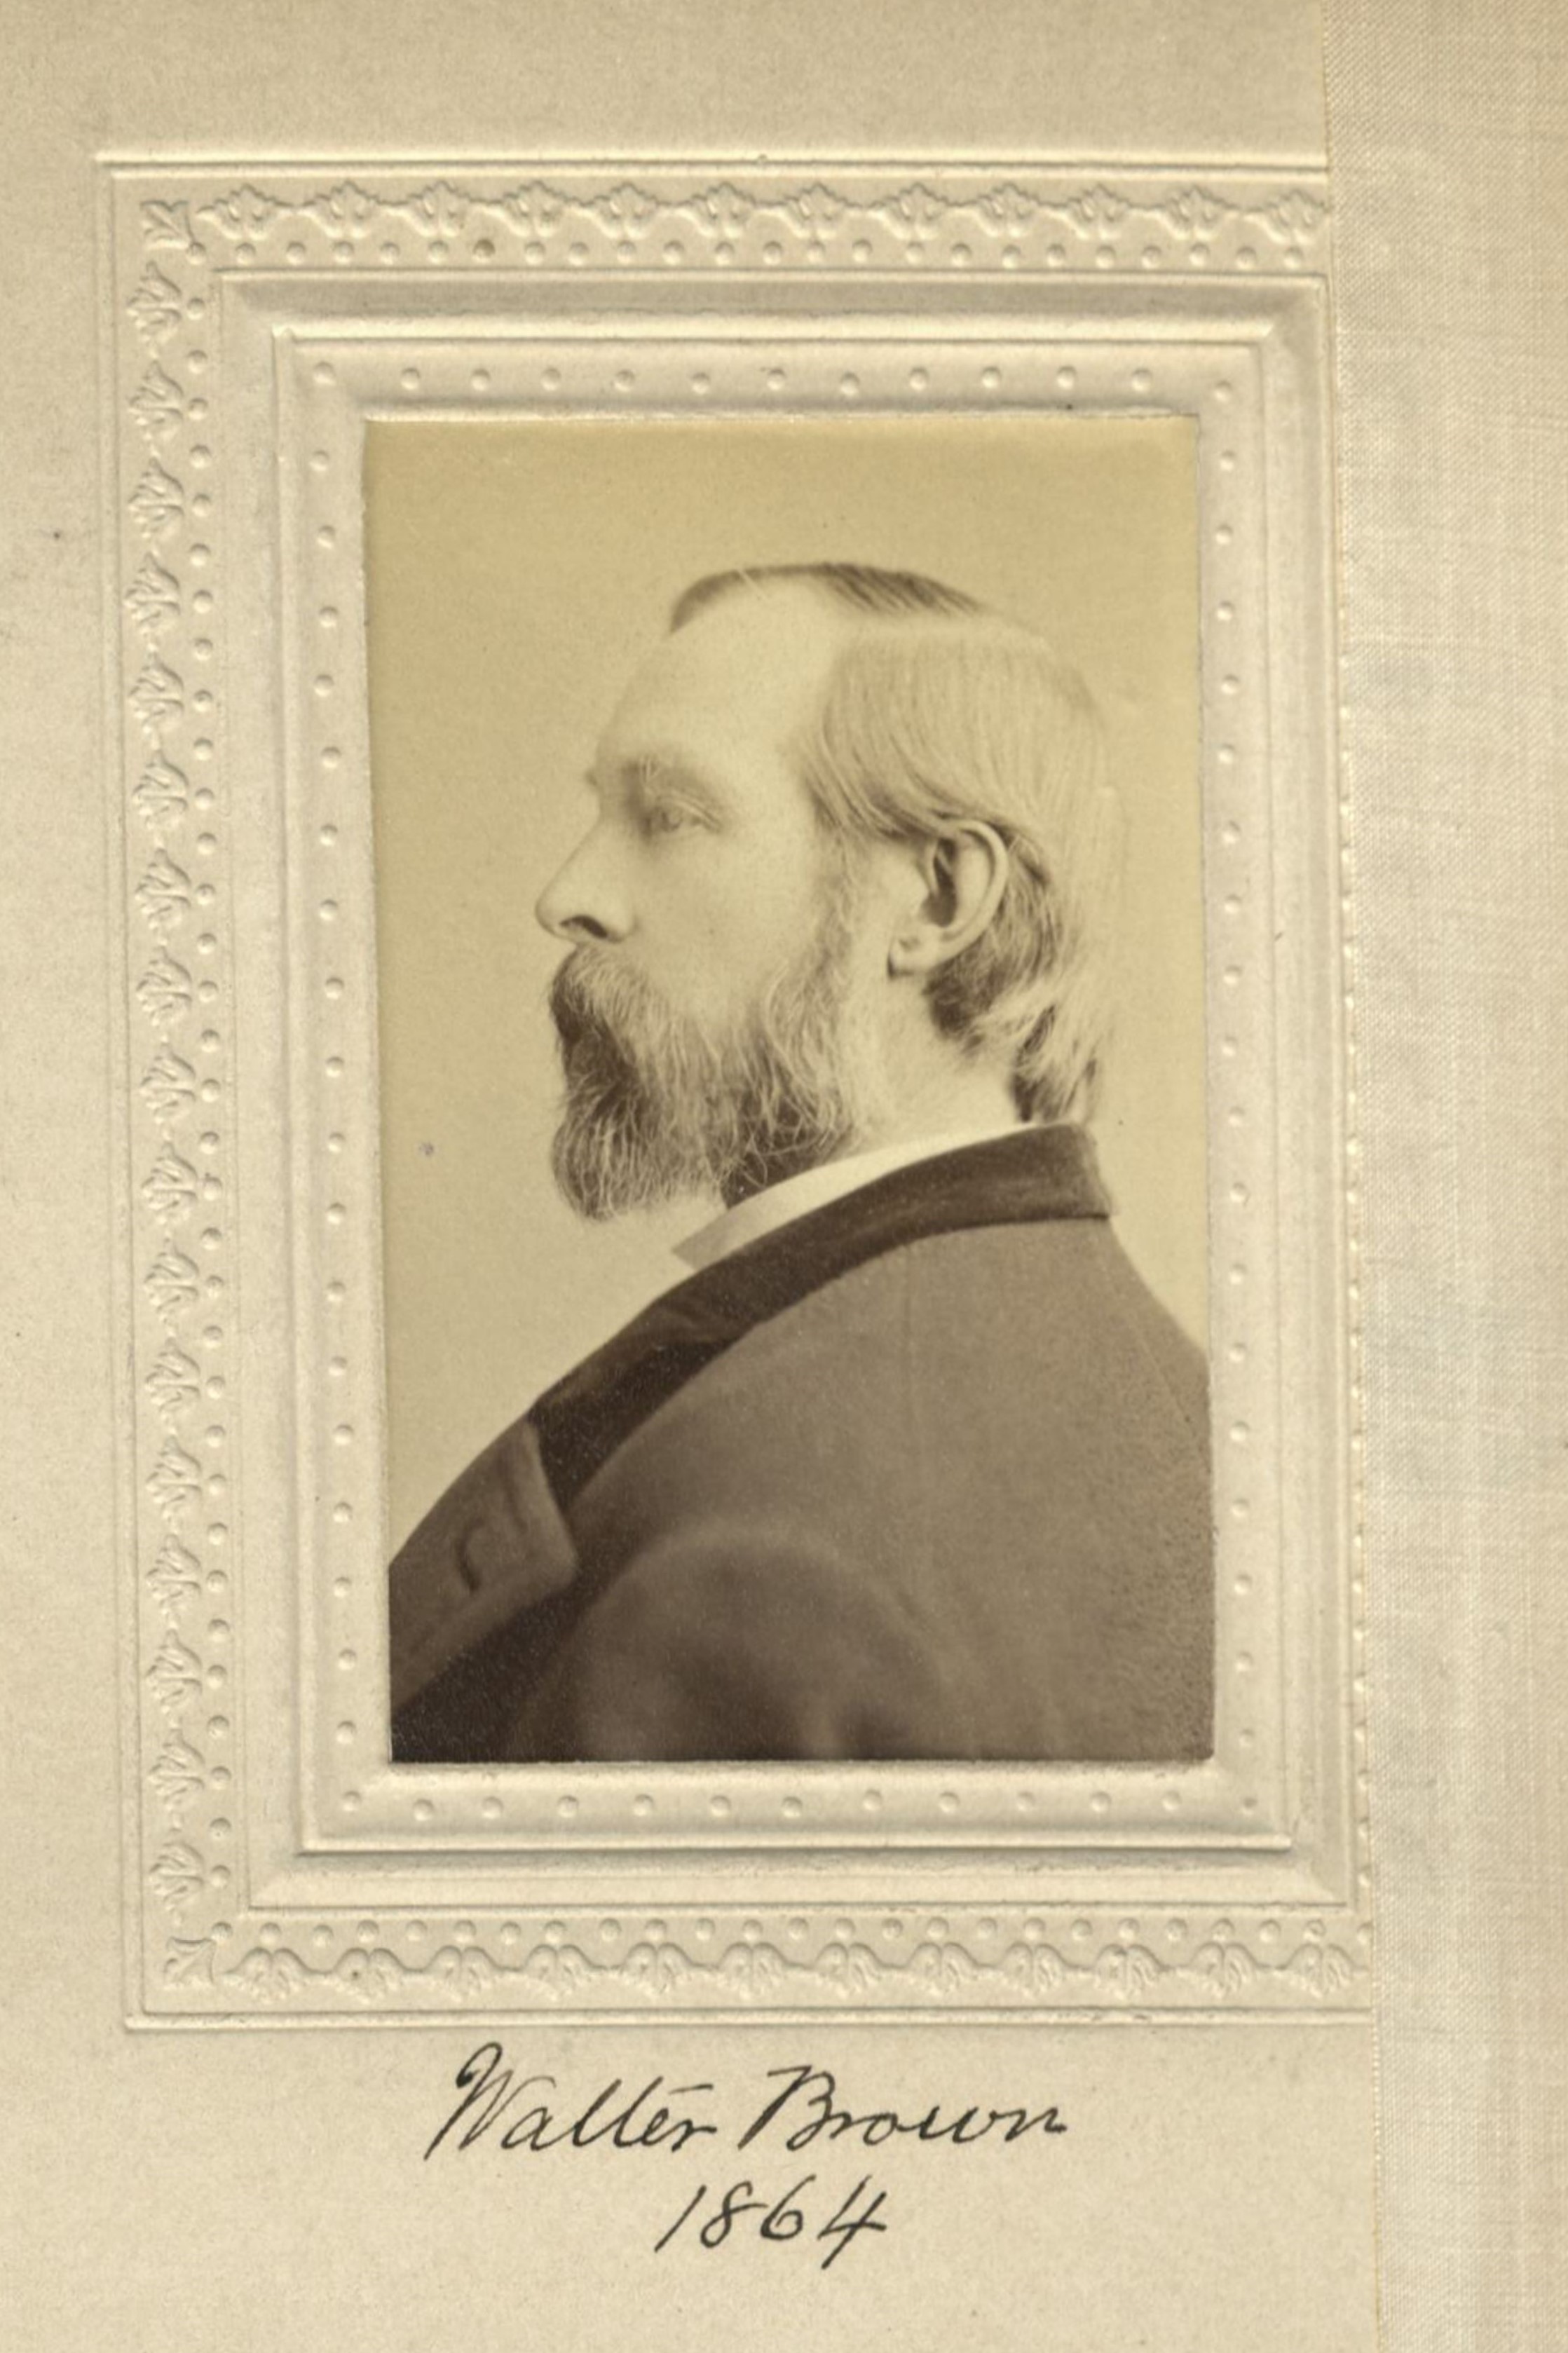 Member portrait of Walter Brown